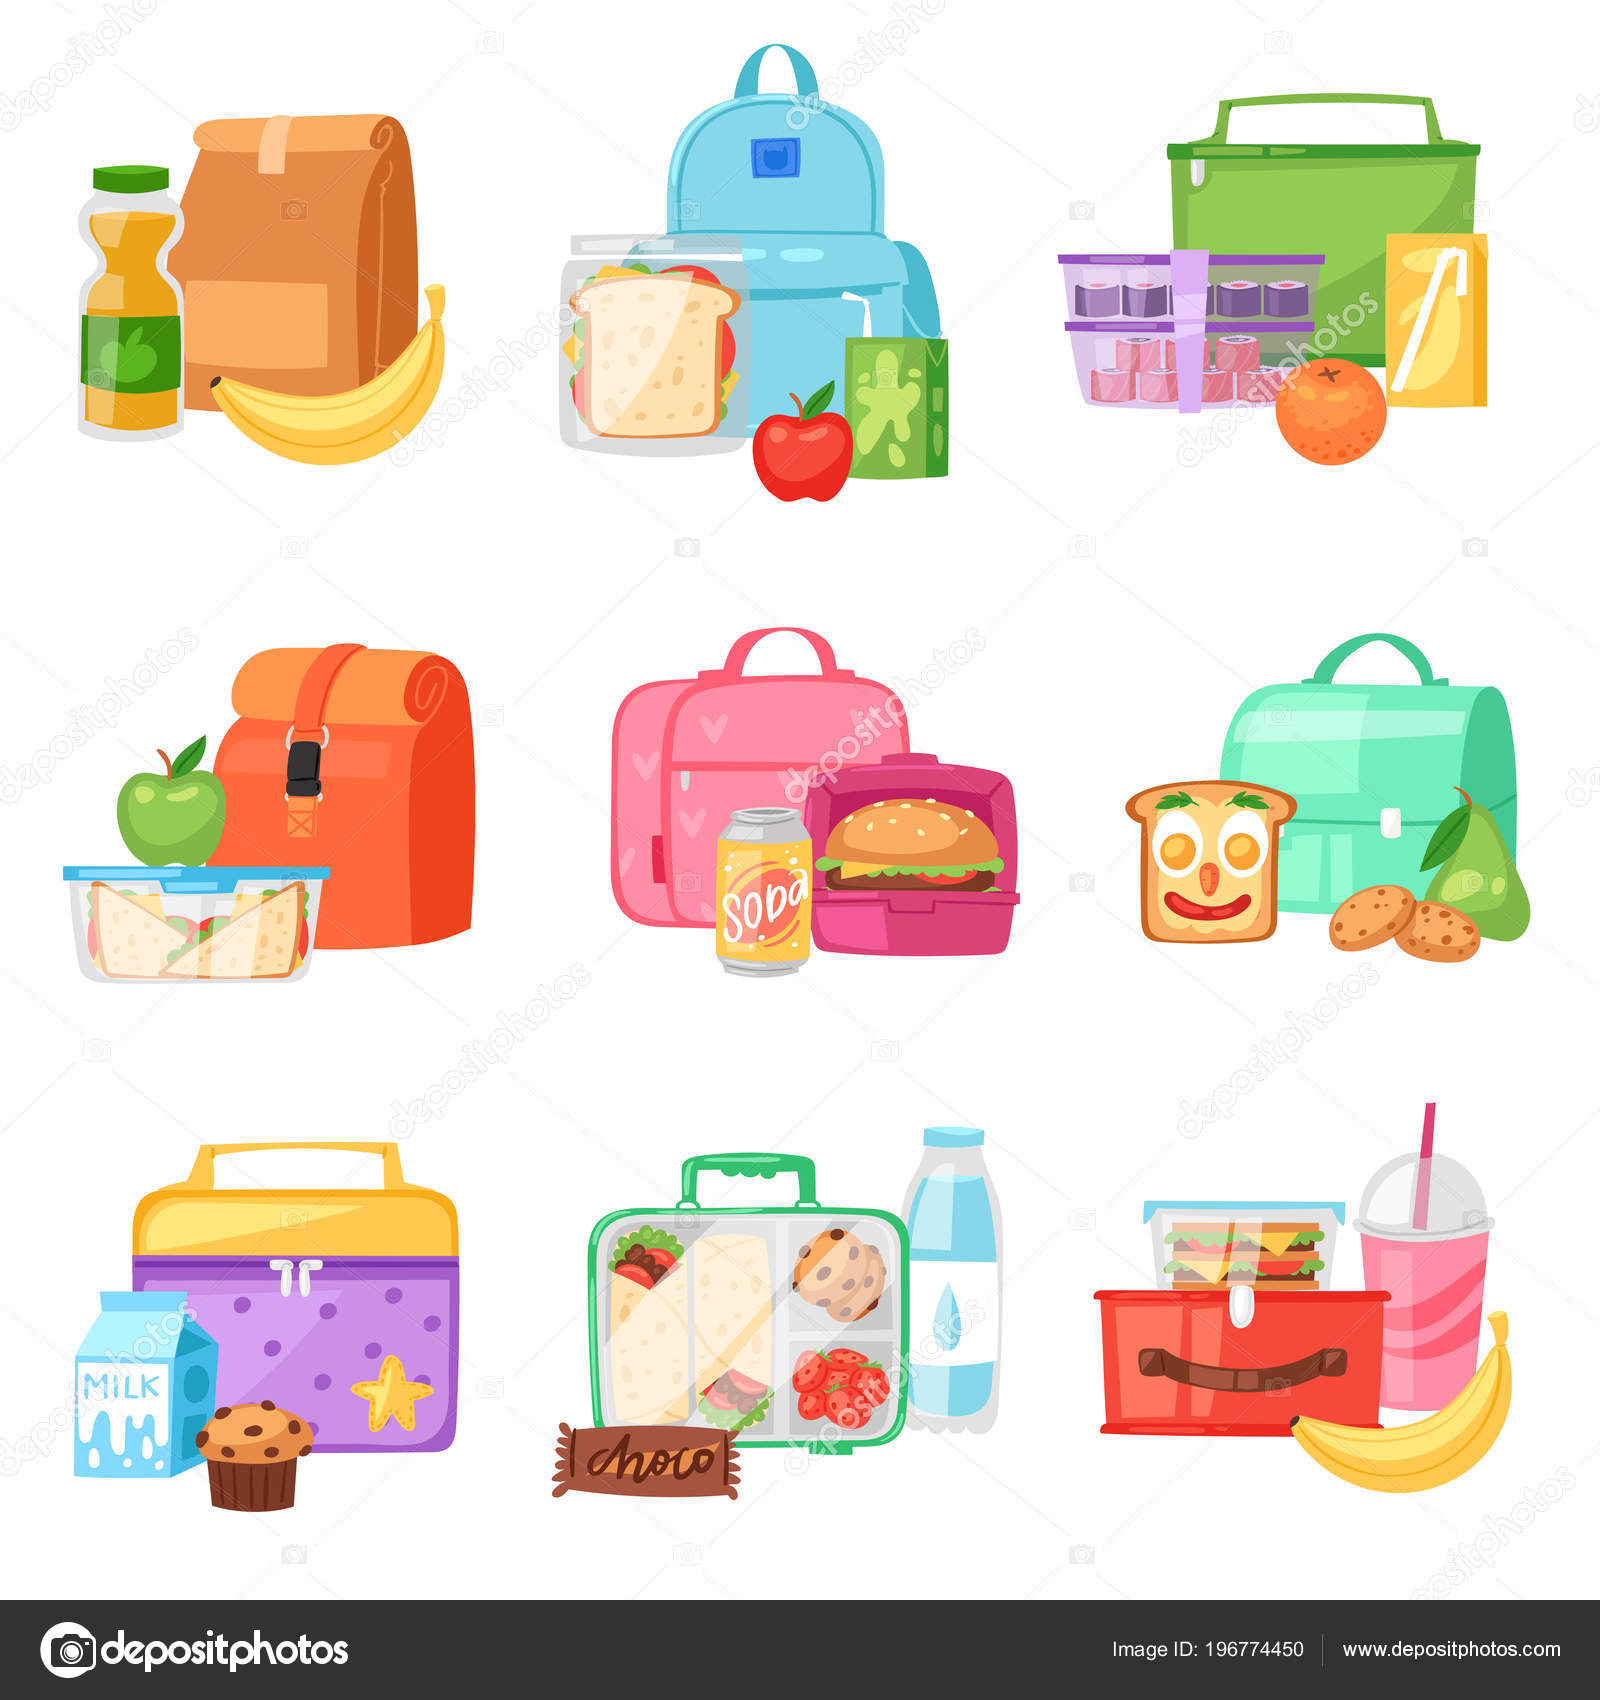 https://st4.depositphotos.com/8696740/19677/v/1600/depositphotos_196774450-stock-illustration-lunch-box-vector-school-lunchbox.jpg